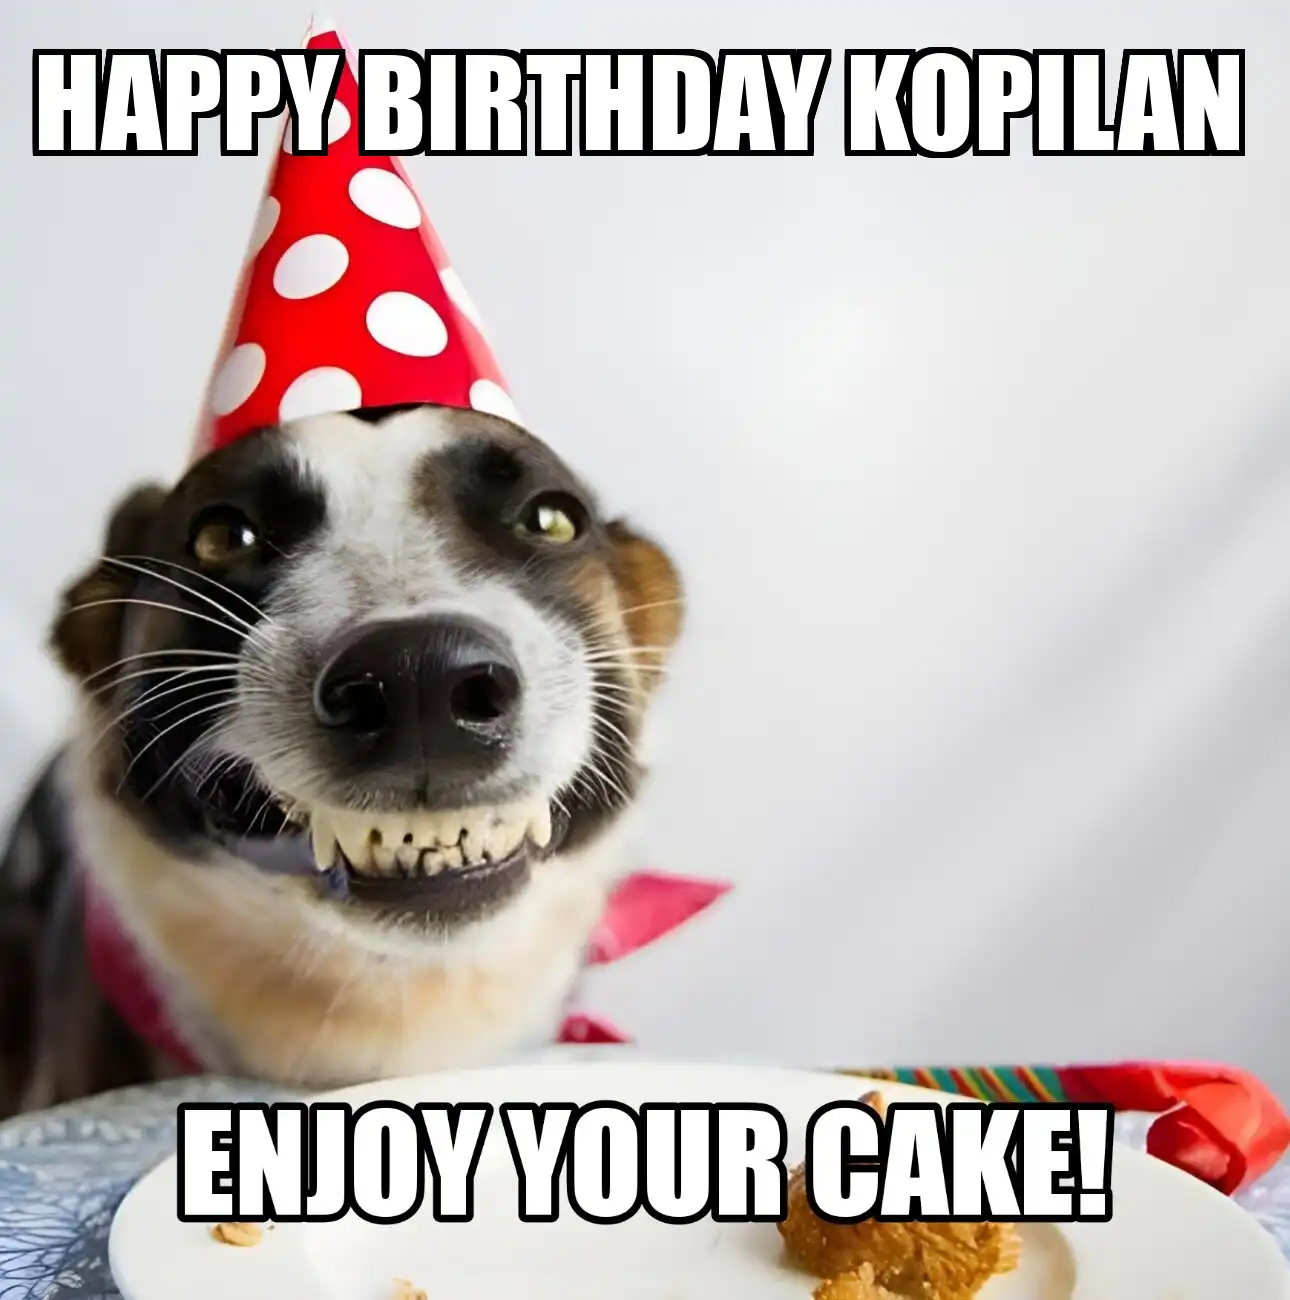 Happy Birthday Kopilan Enjoy Your Cake Dog Meme